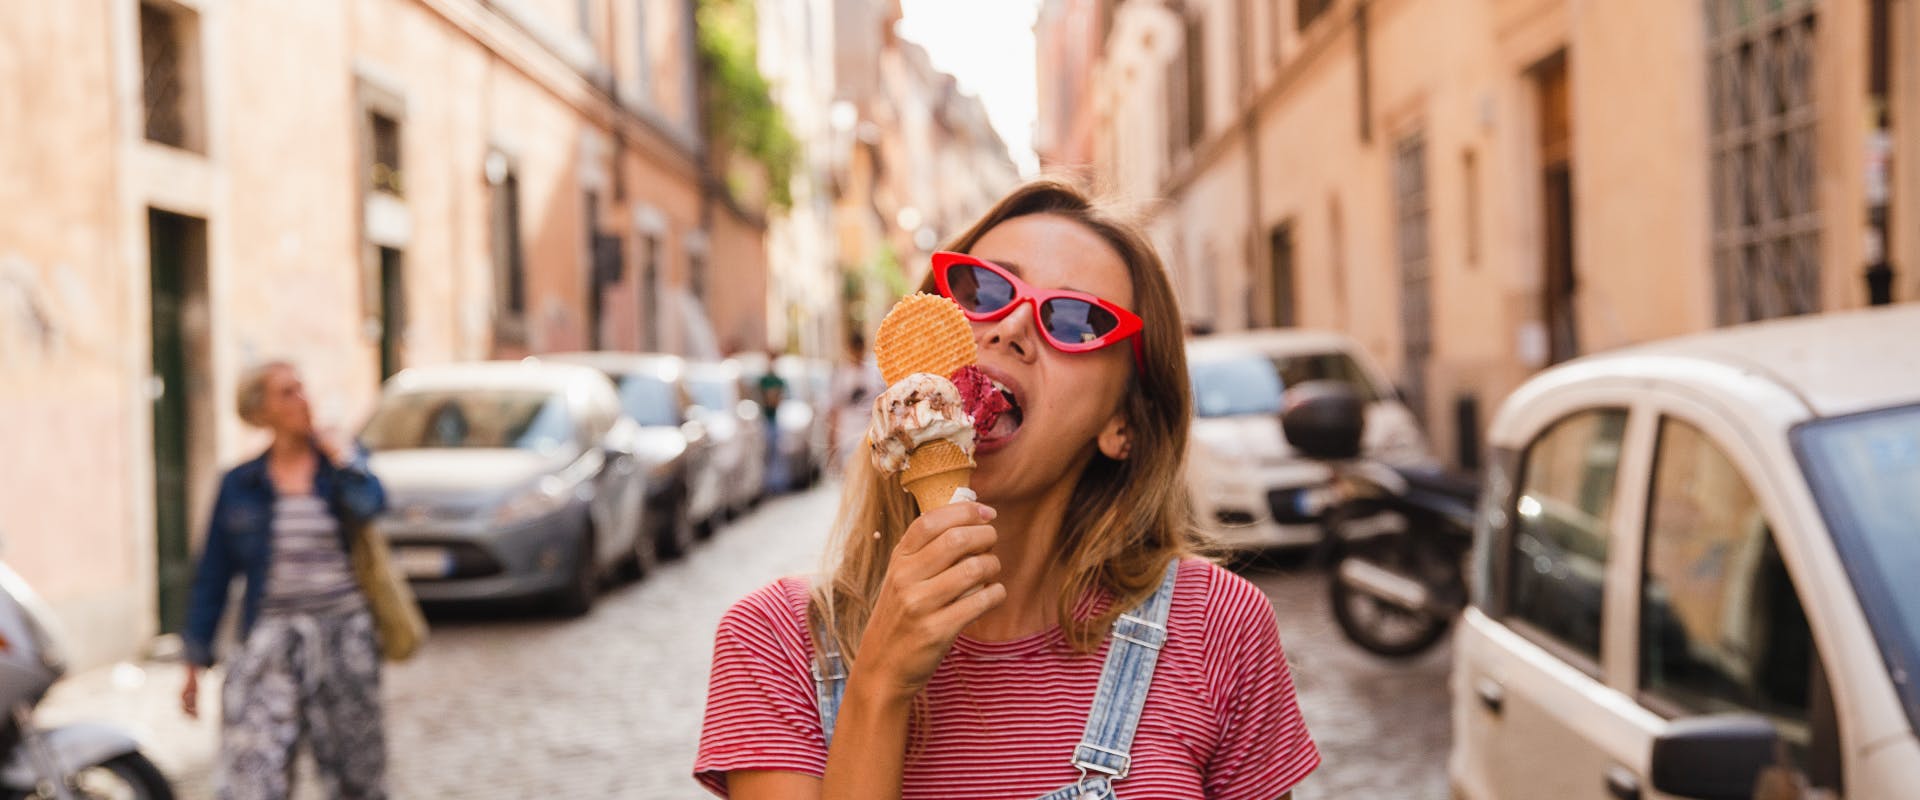 A woman eats a gelato in Rome.